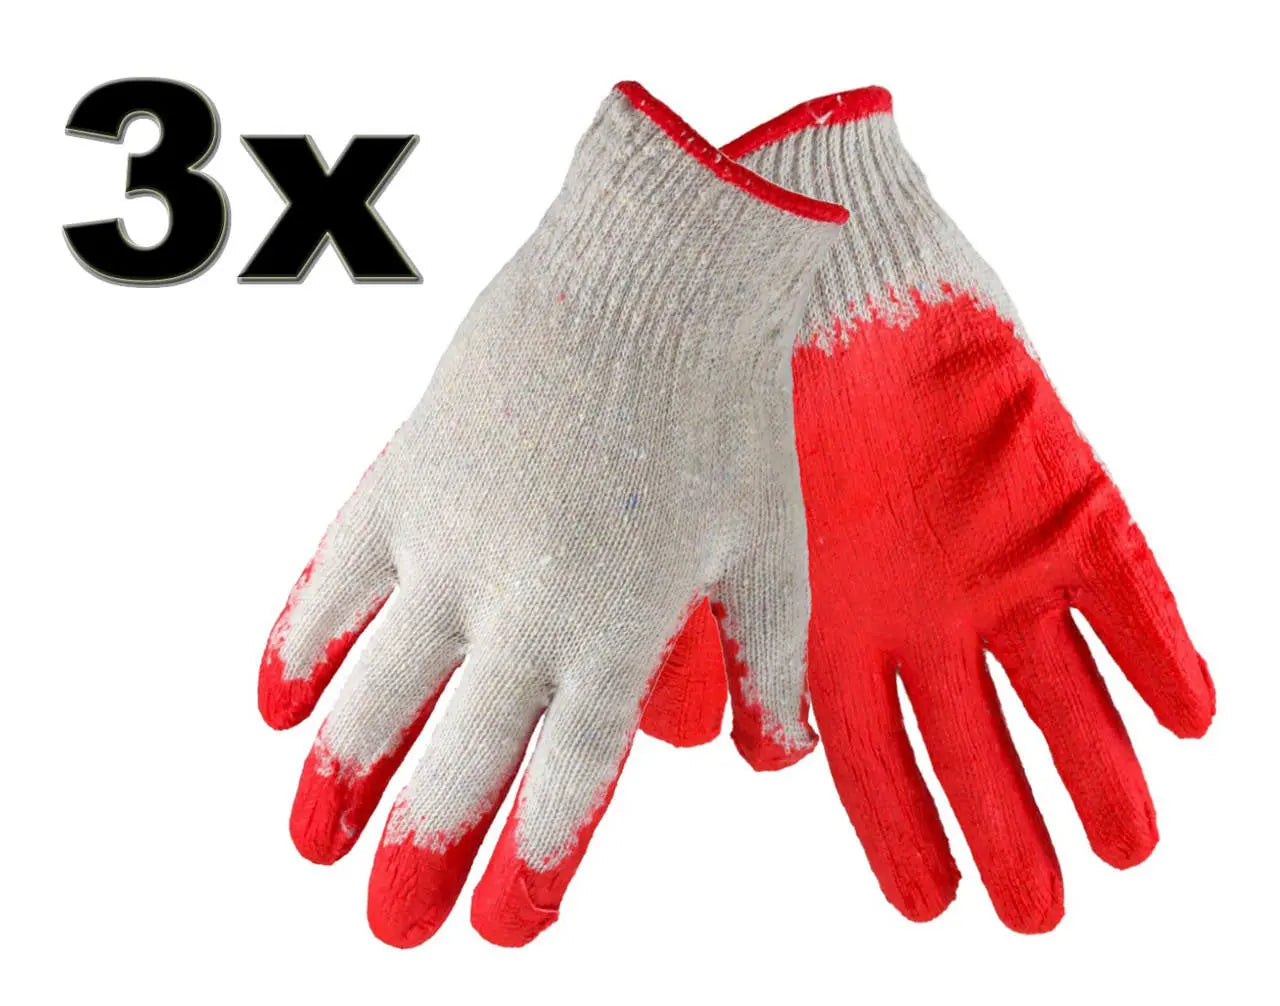 3 Pairs Cotton Protective Garden Gardening Gloves Perfect Grip Standard Size - 